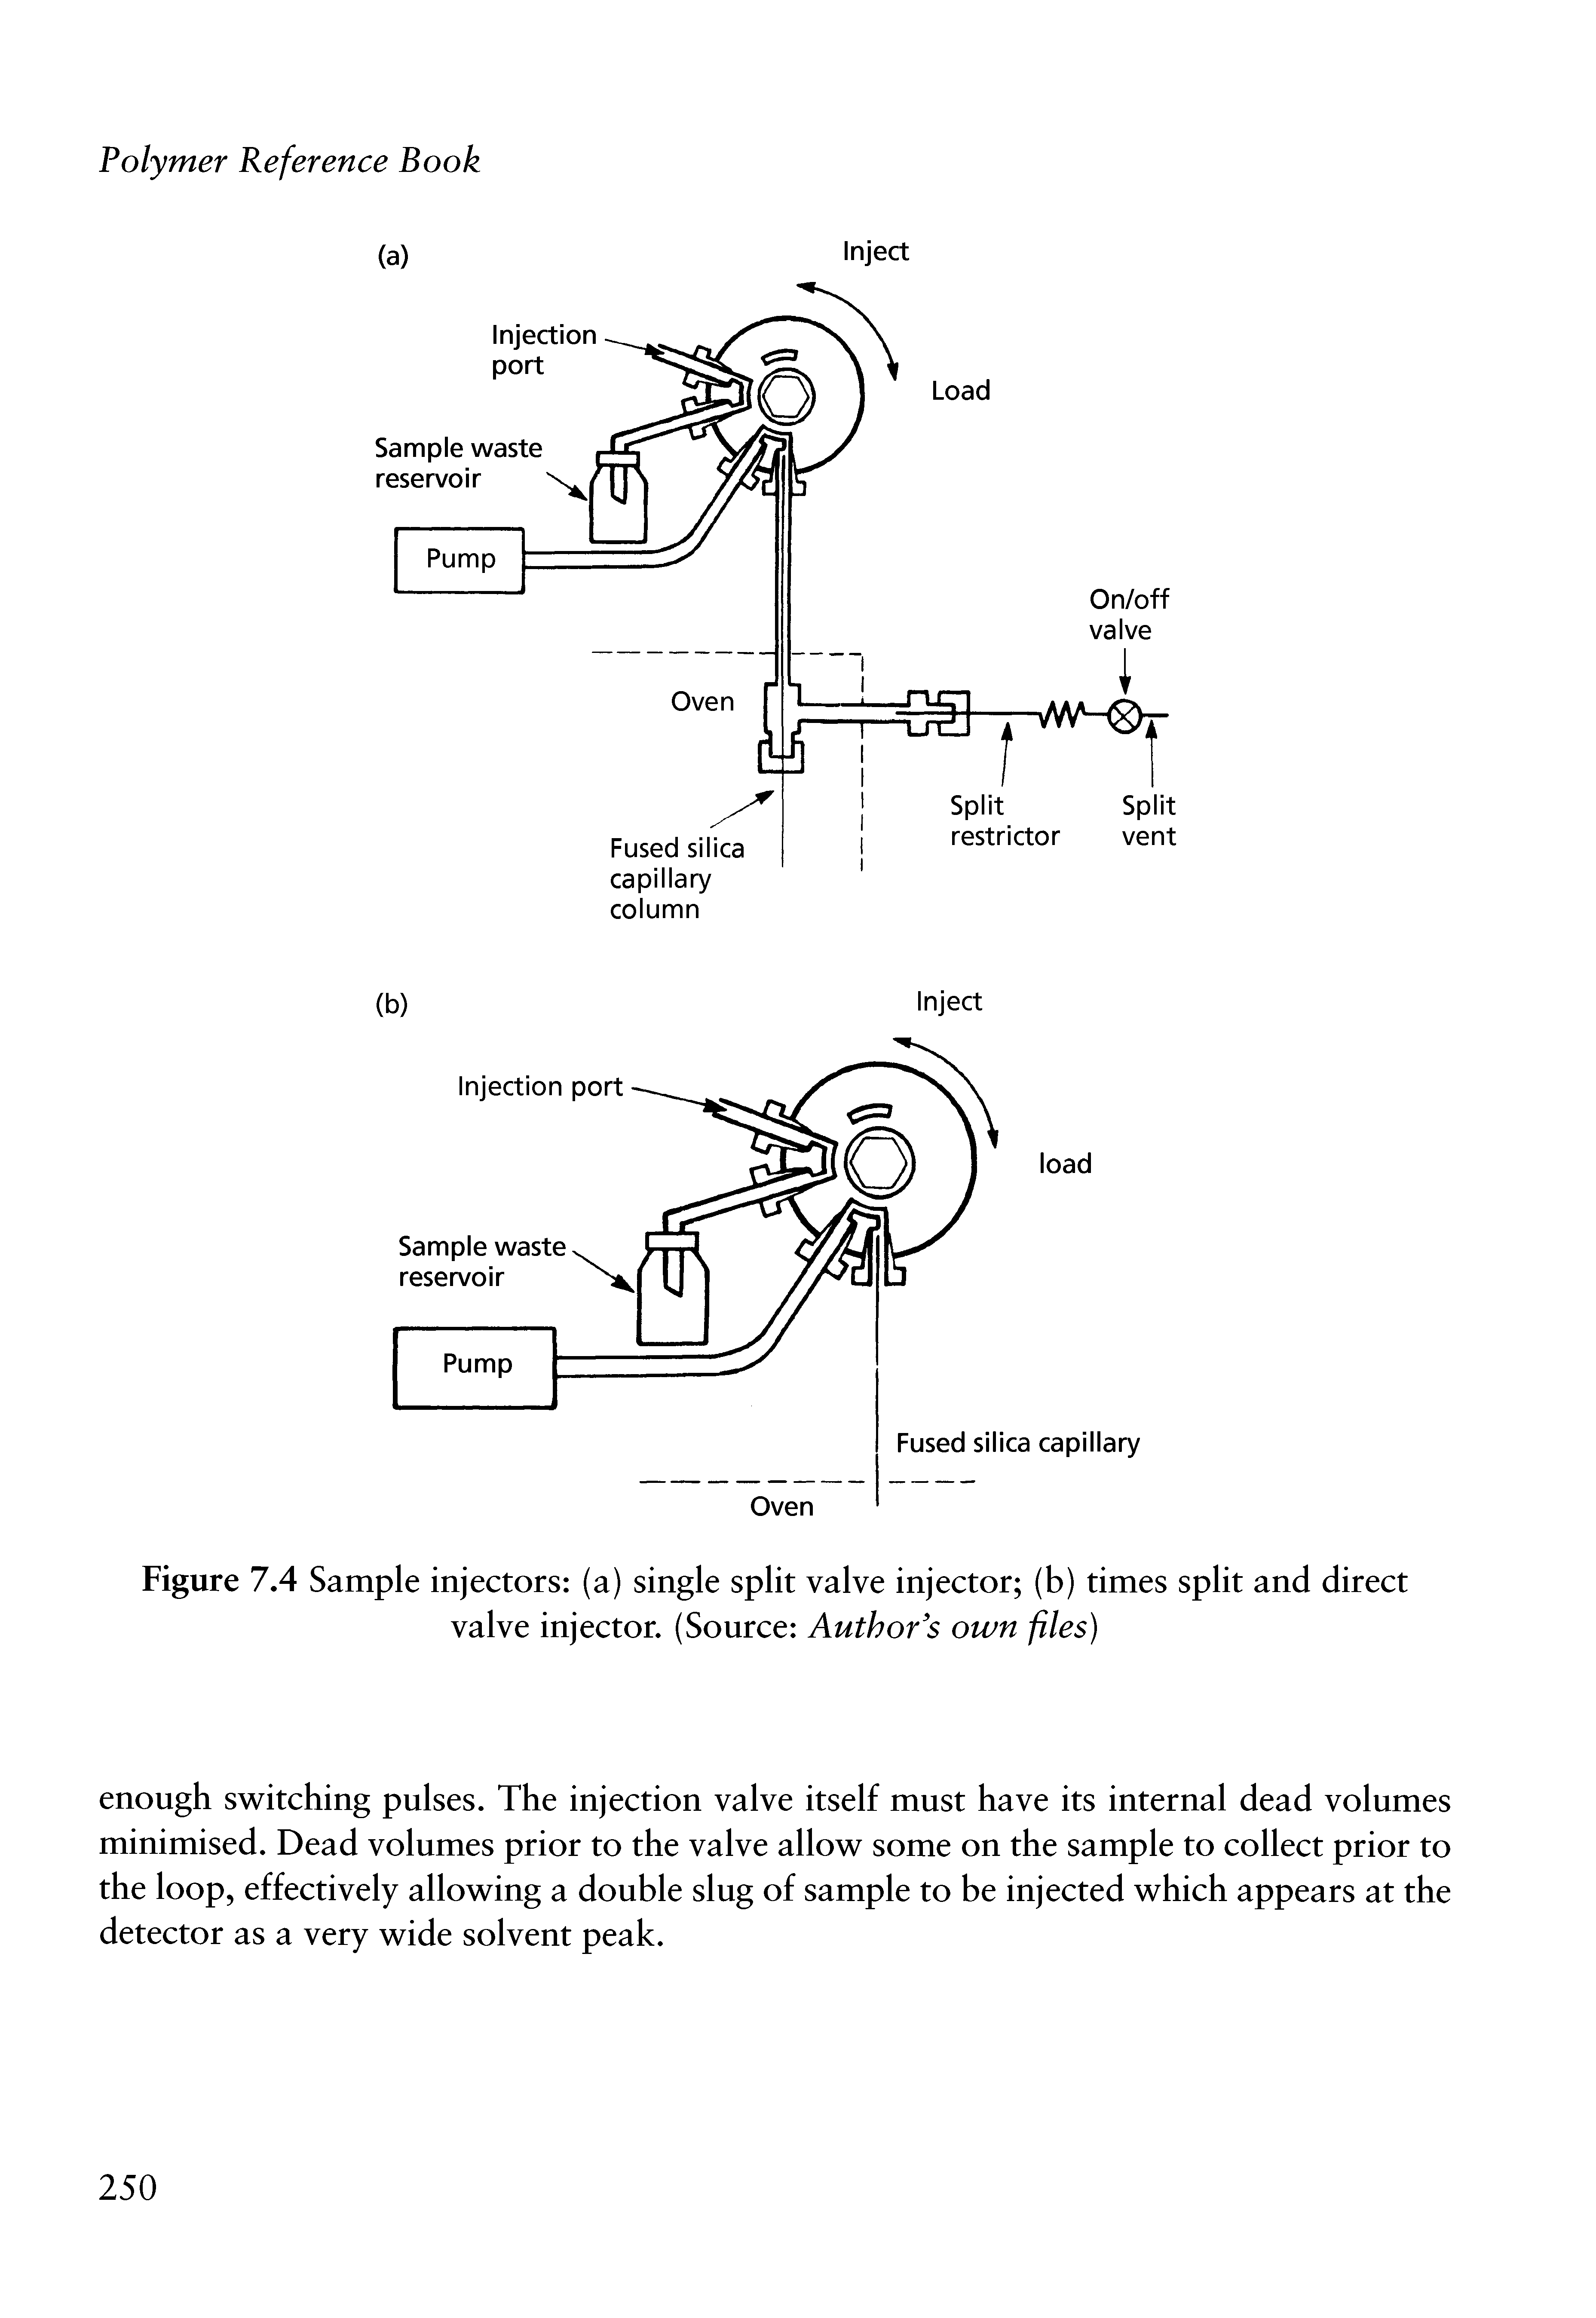 Figure 7.4 Sample injectors (a) single split valve injector (b) times split and direct valve injector. (Source Author s own files)...